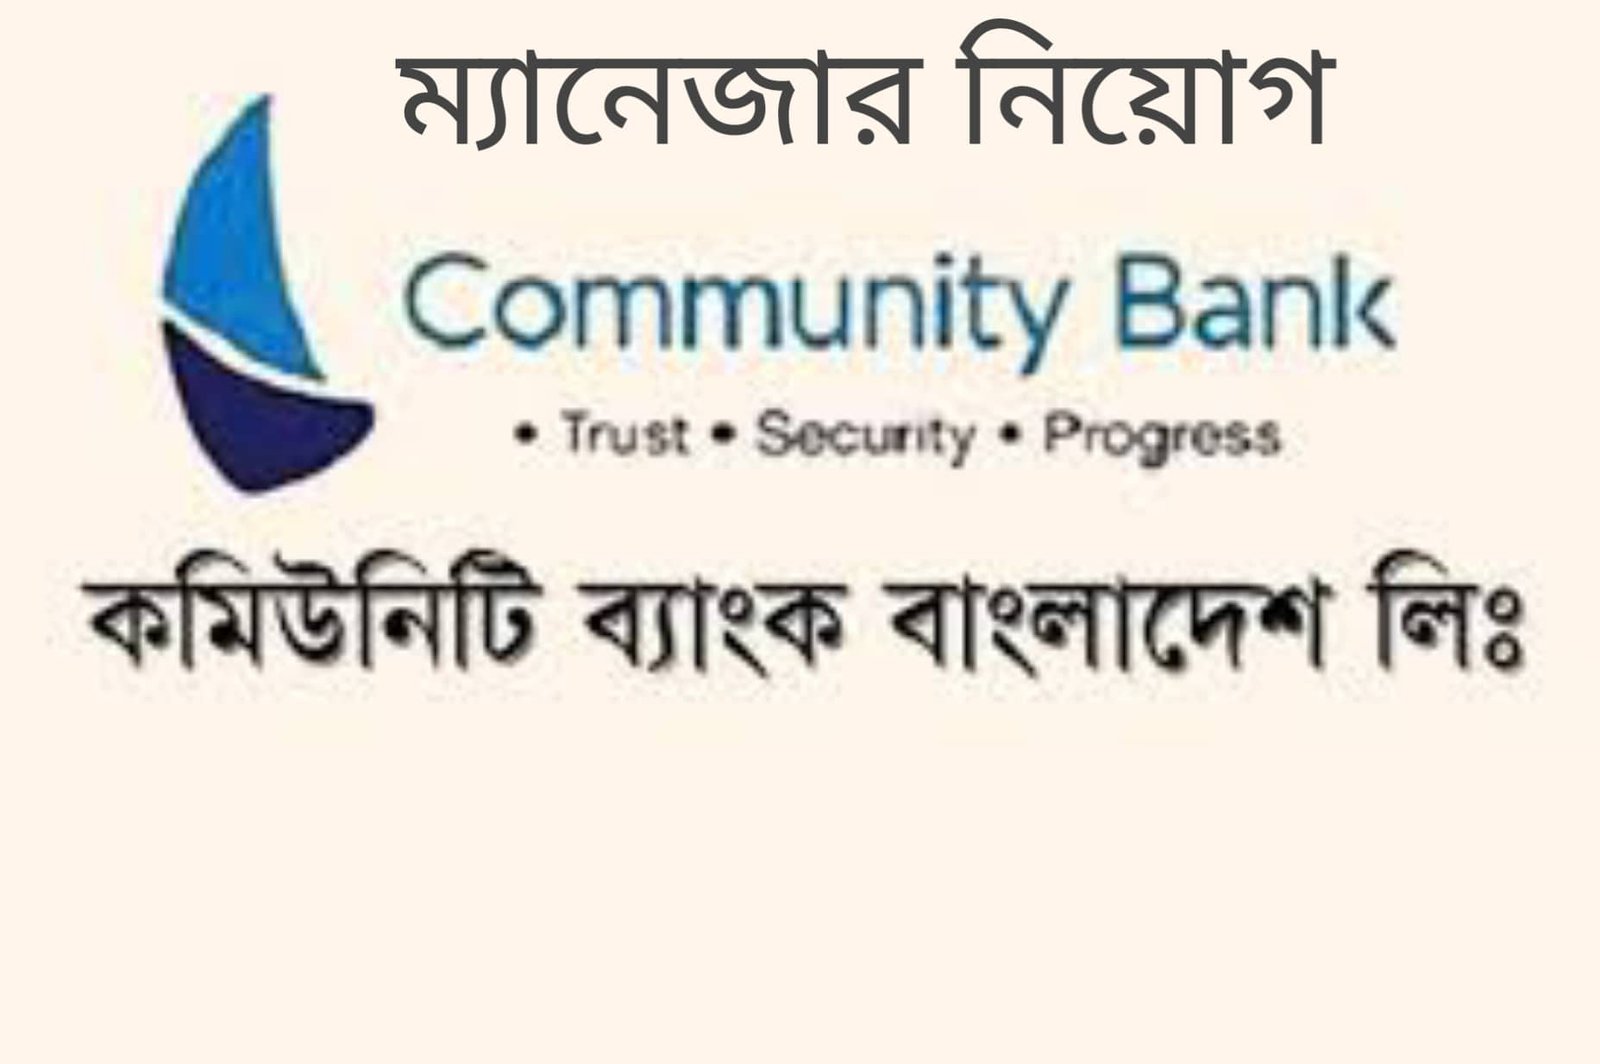 Community Bank Bangladesh Ltd ржорзНржпрж╛ржирзЗржЬрж╛рж░ ржирж┐рзЯрзЛржЧред